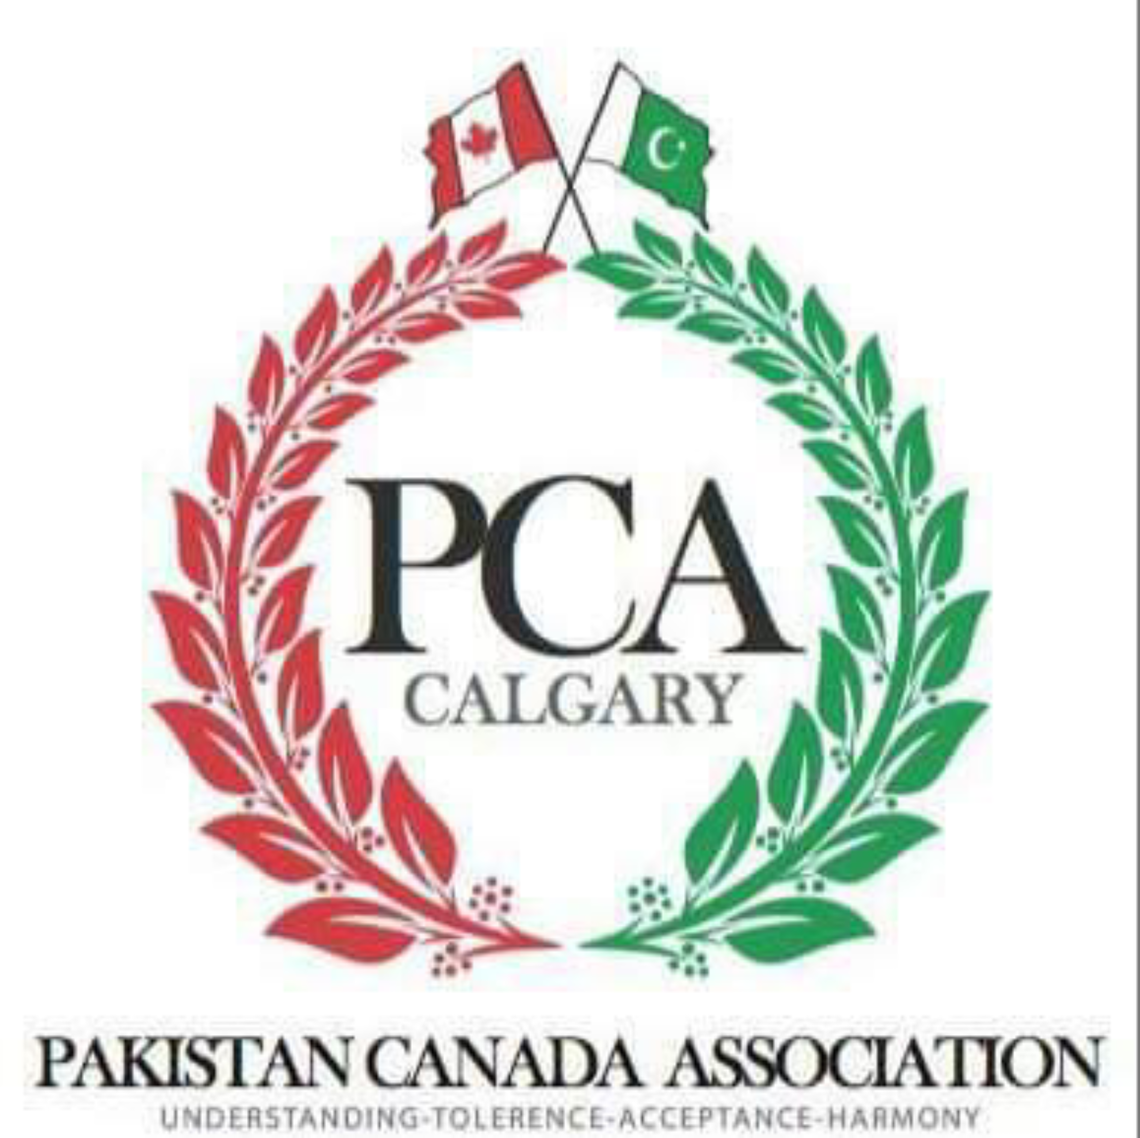 Pakistan Canada Association